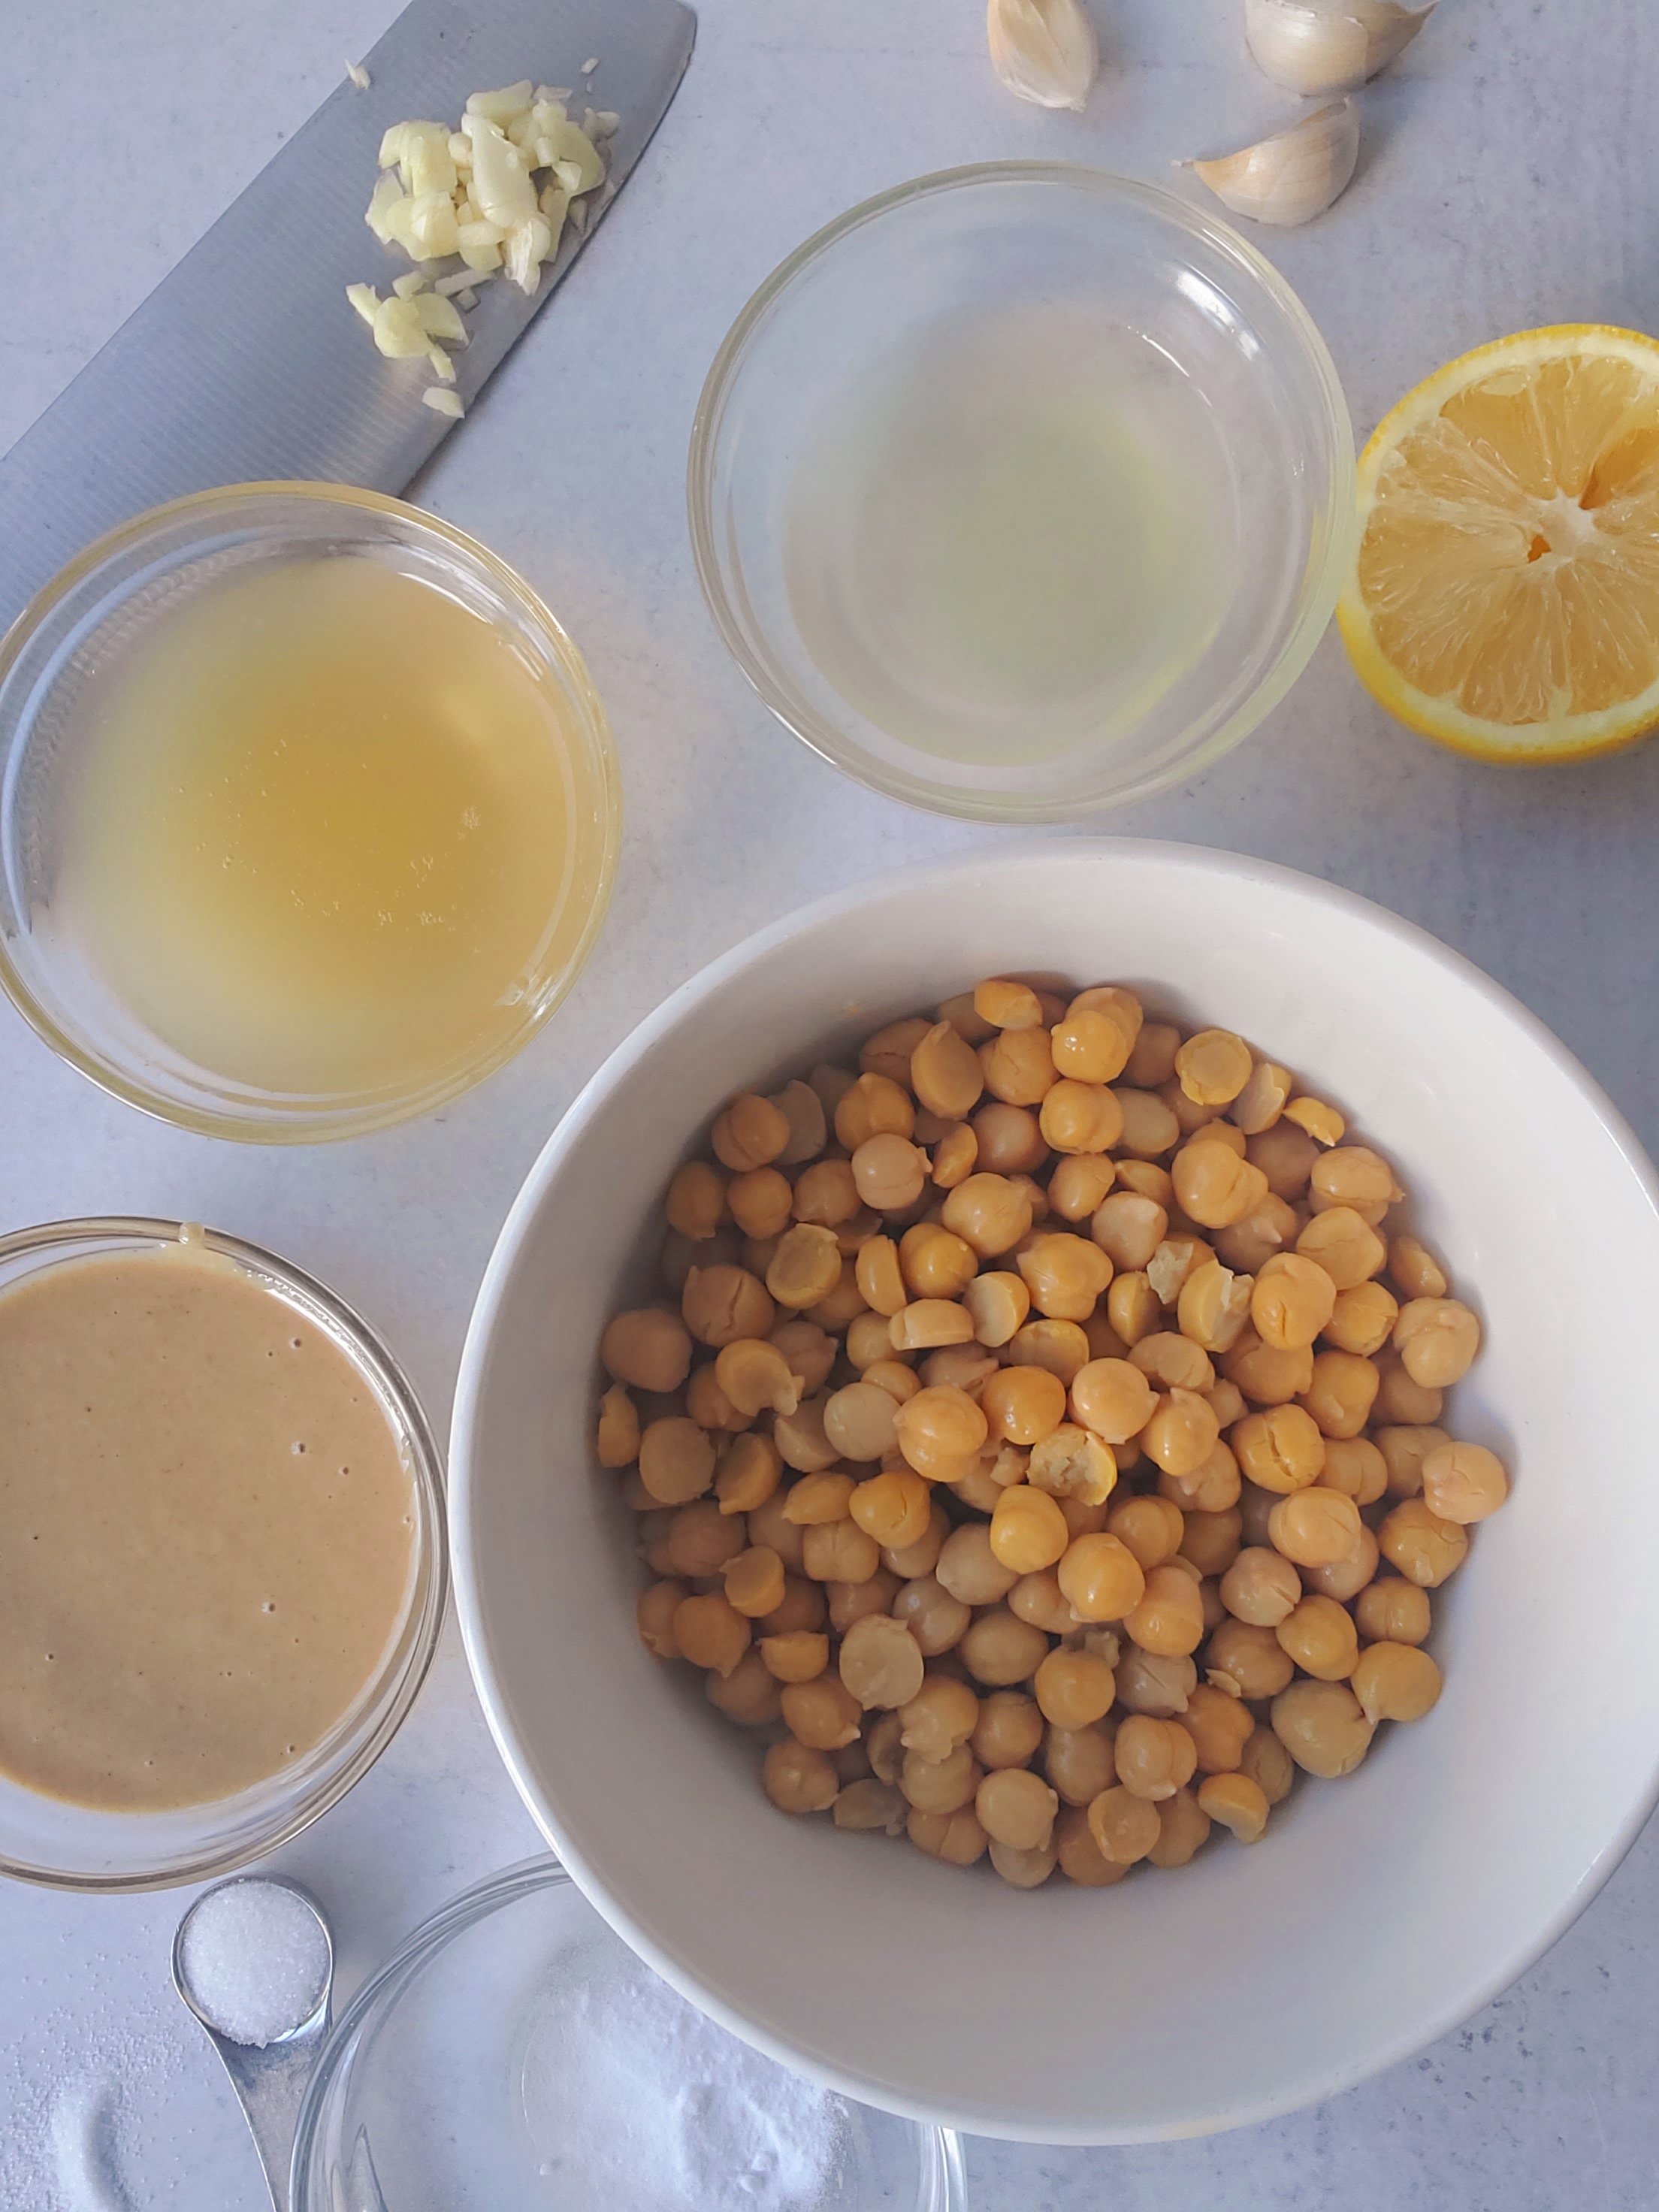 Ingredients for homemade hummus - chickpeas, lemon juice, tahini, garlic, cold water or chickpea reserved liquid